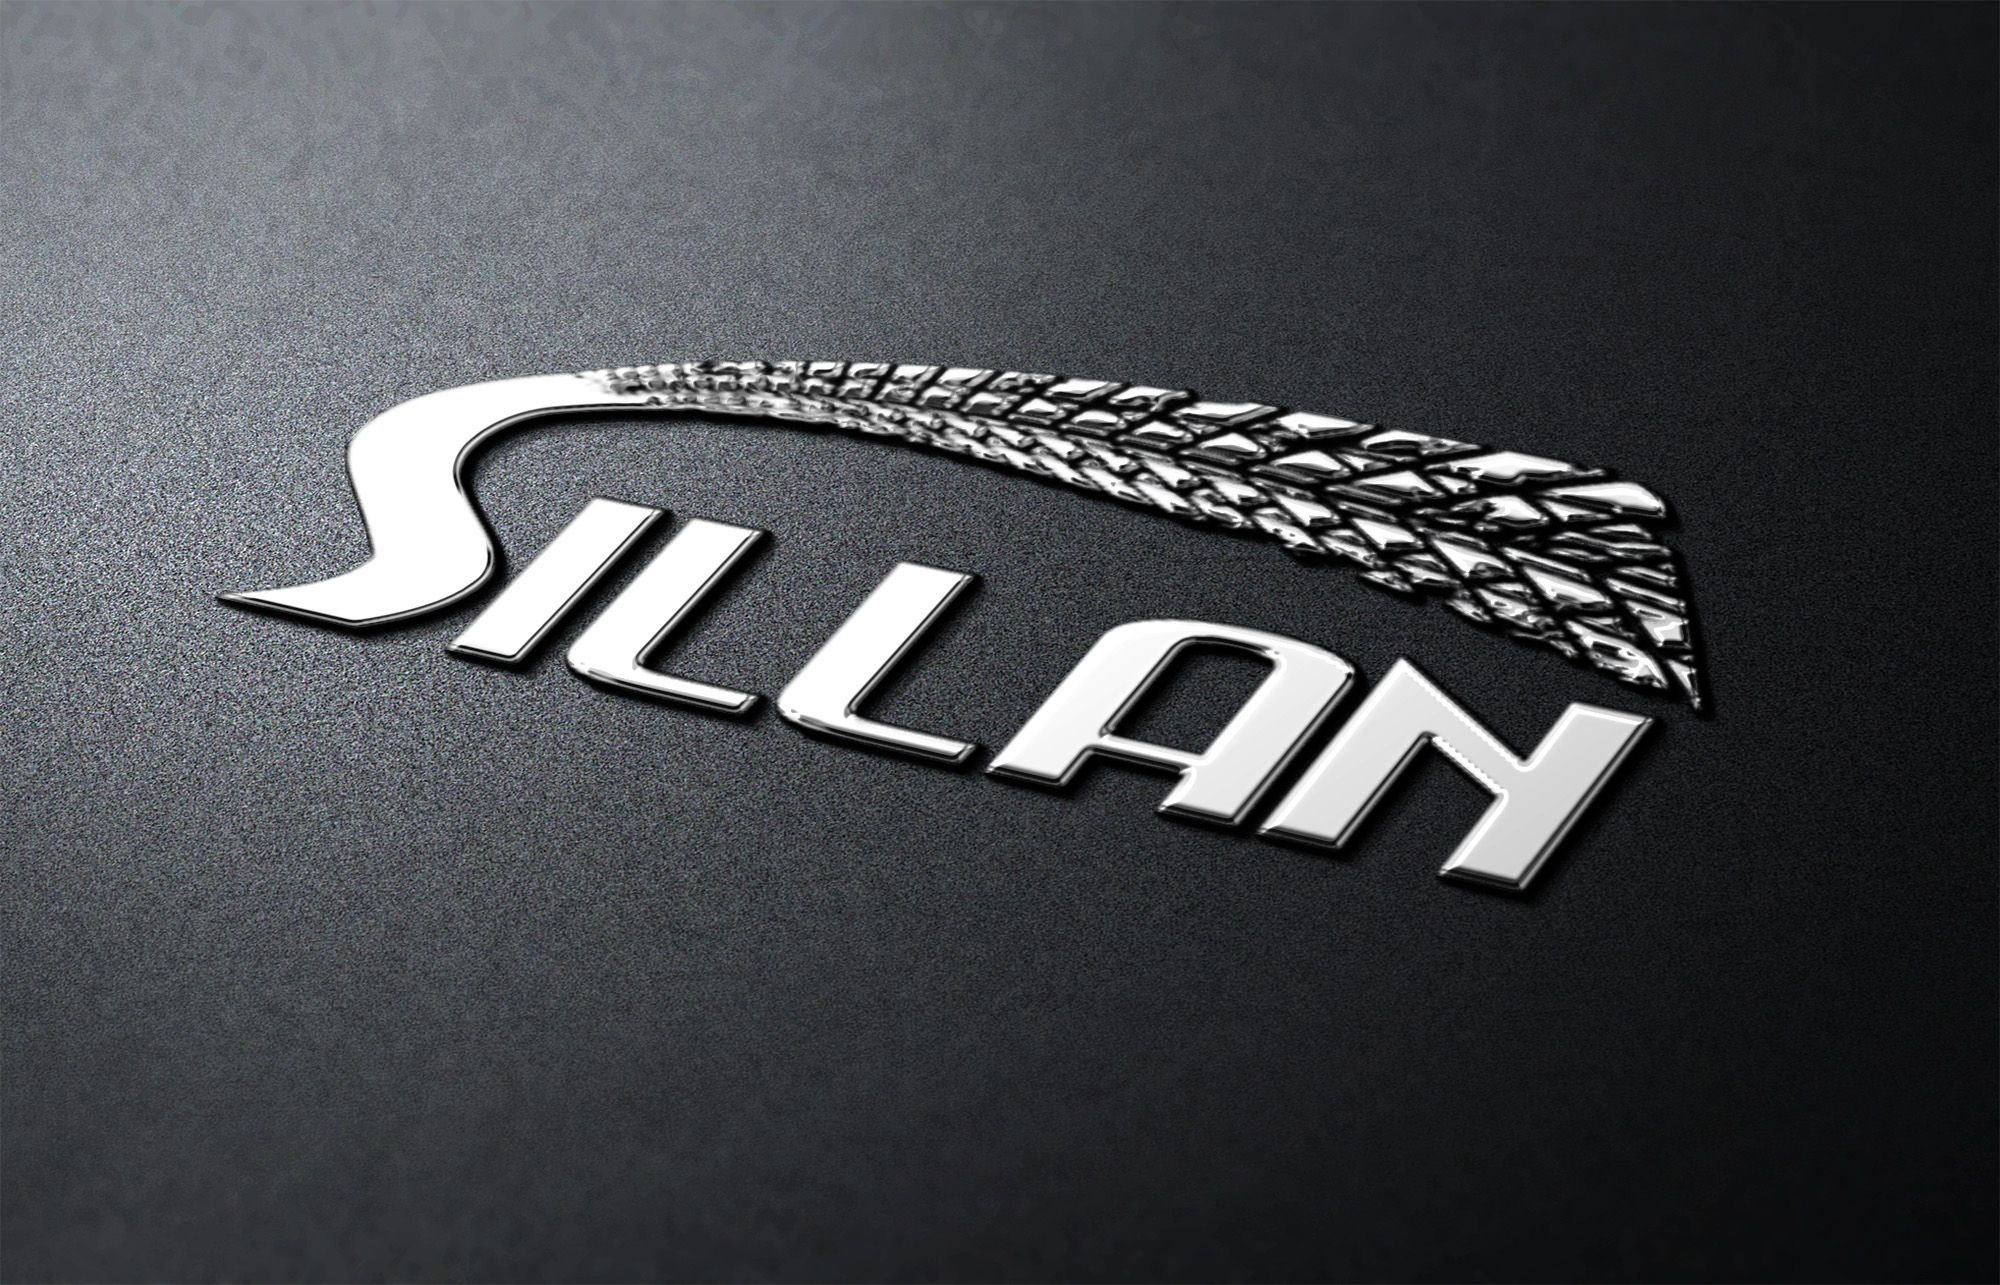 Логотип для Sillan - дизайнер GustaV